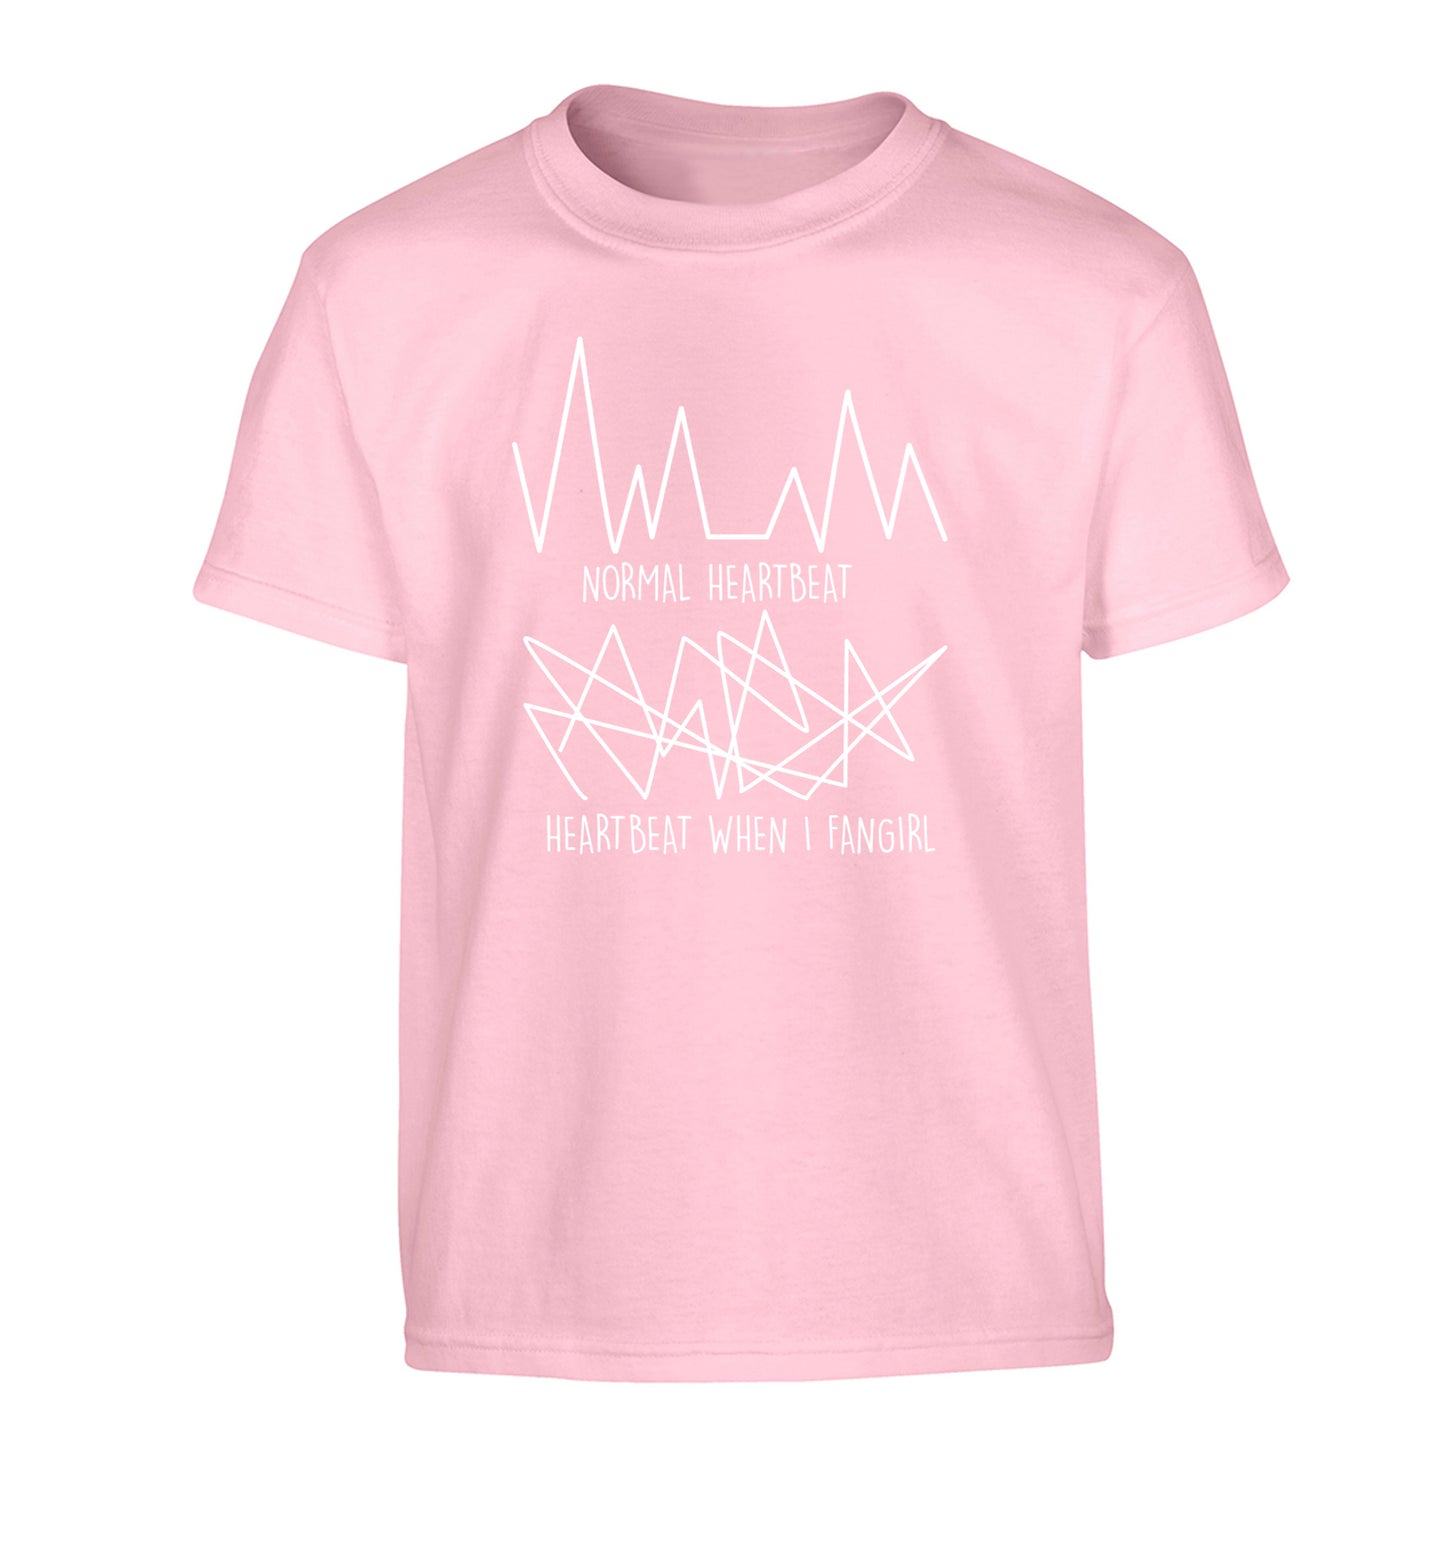 Normal heartbeat heartbeat when I fangirl Children's light pink Tshirt 12-14 Years